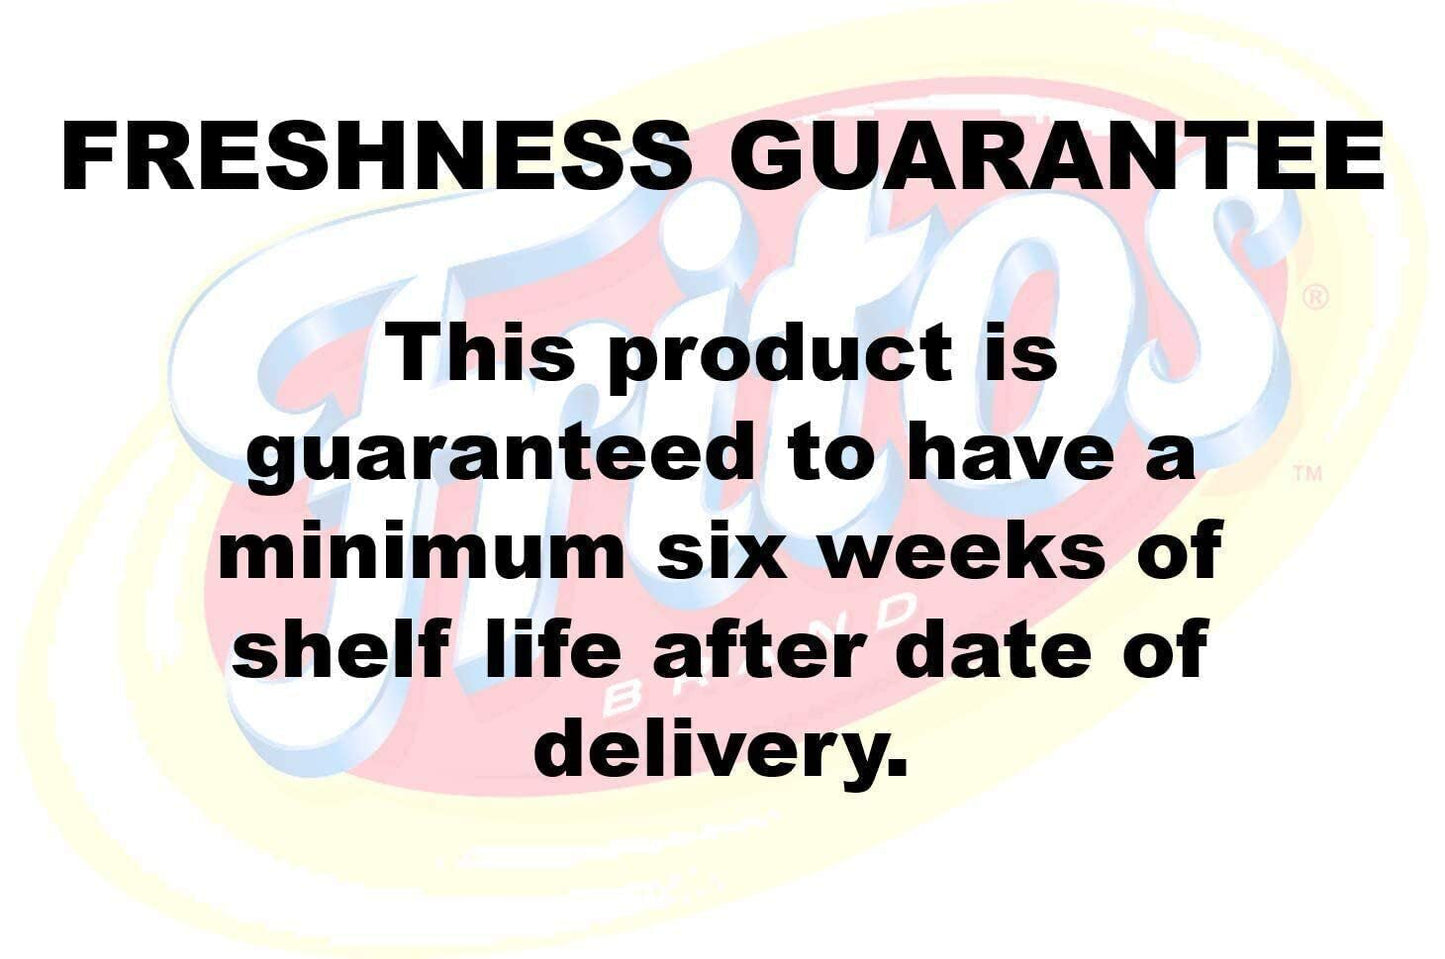 Cheetos Puffs Value Sized Bag freshness guarantee